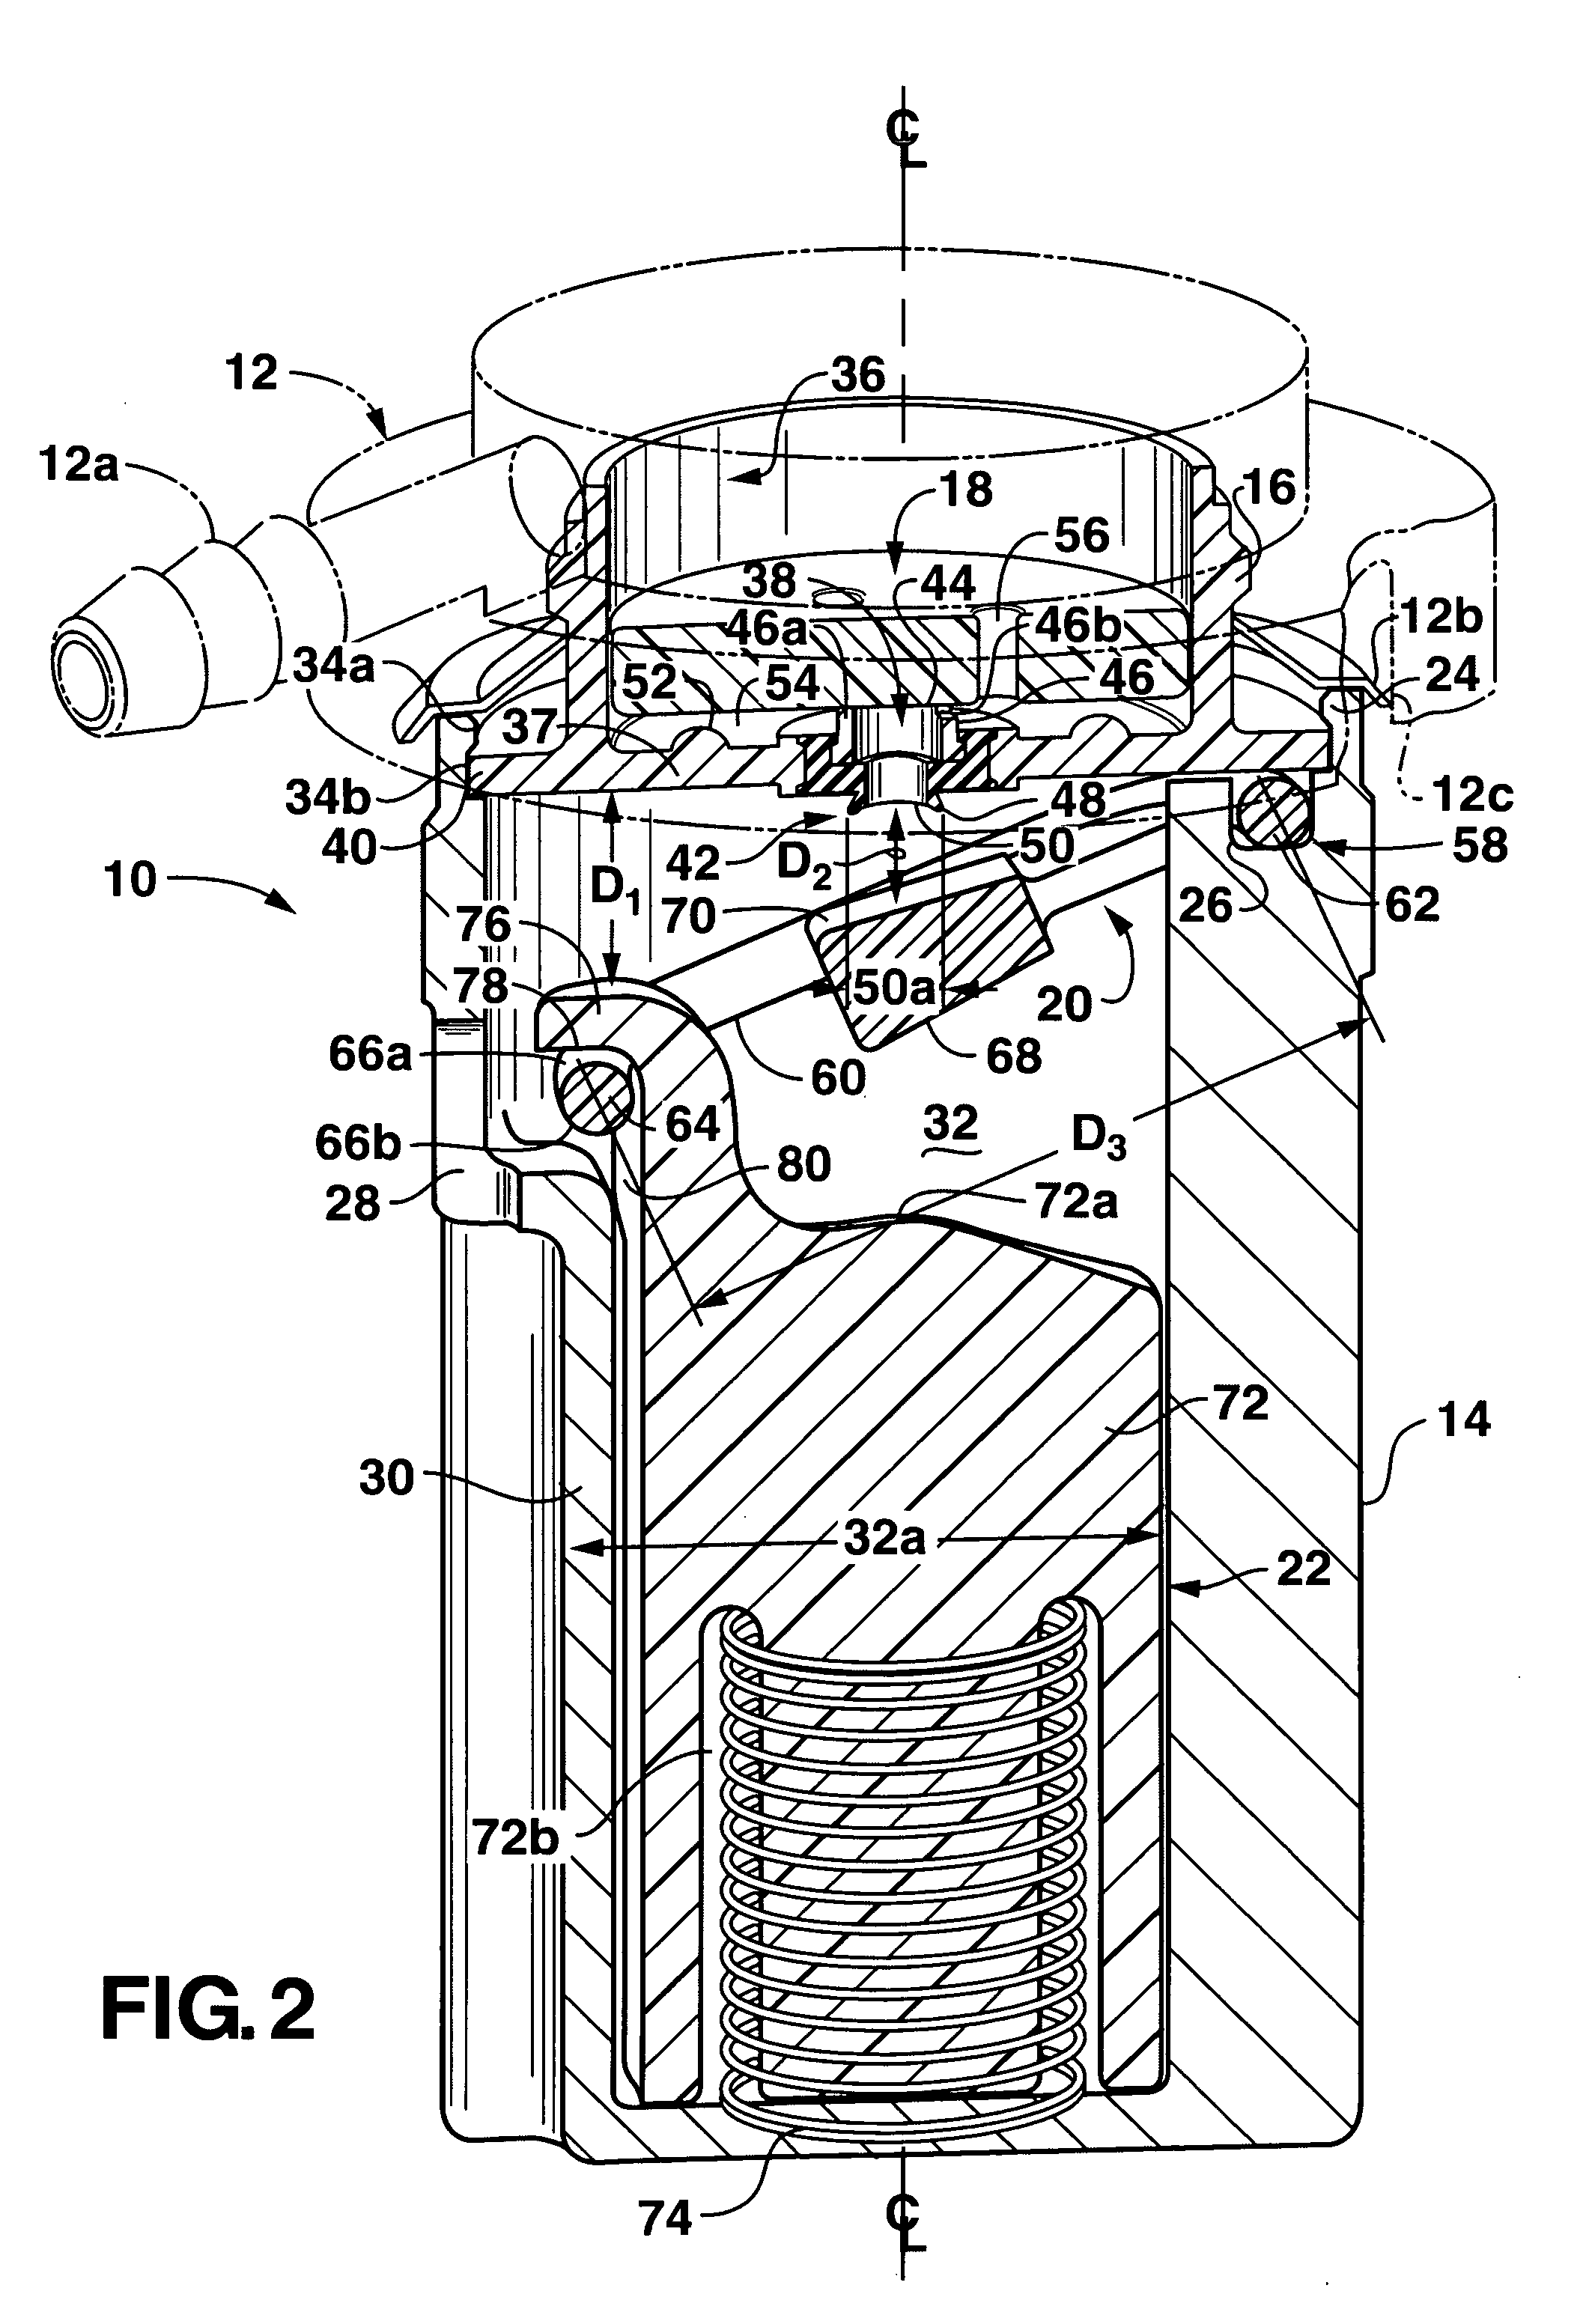 Vent valve assembly with lever arrangement